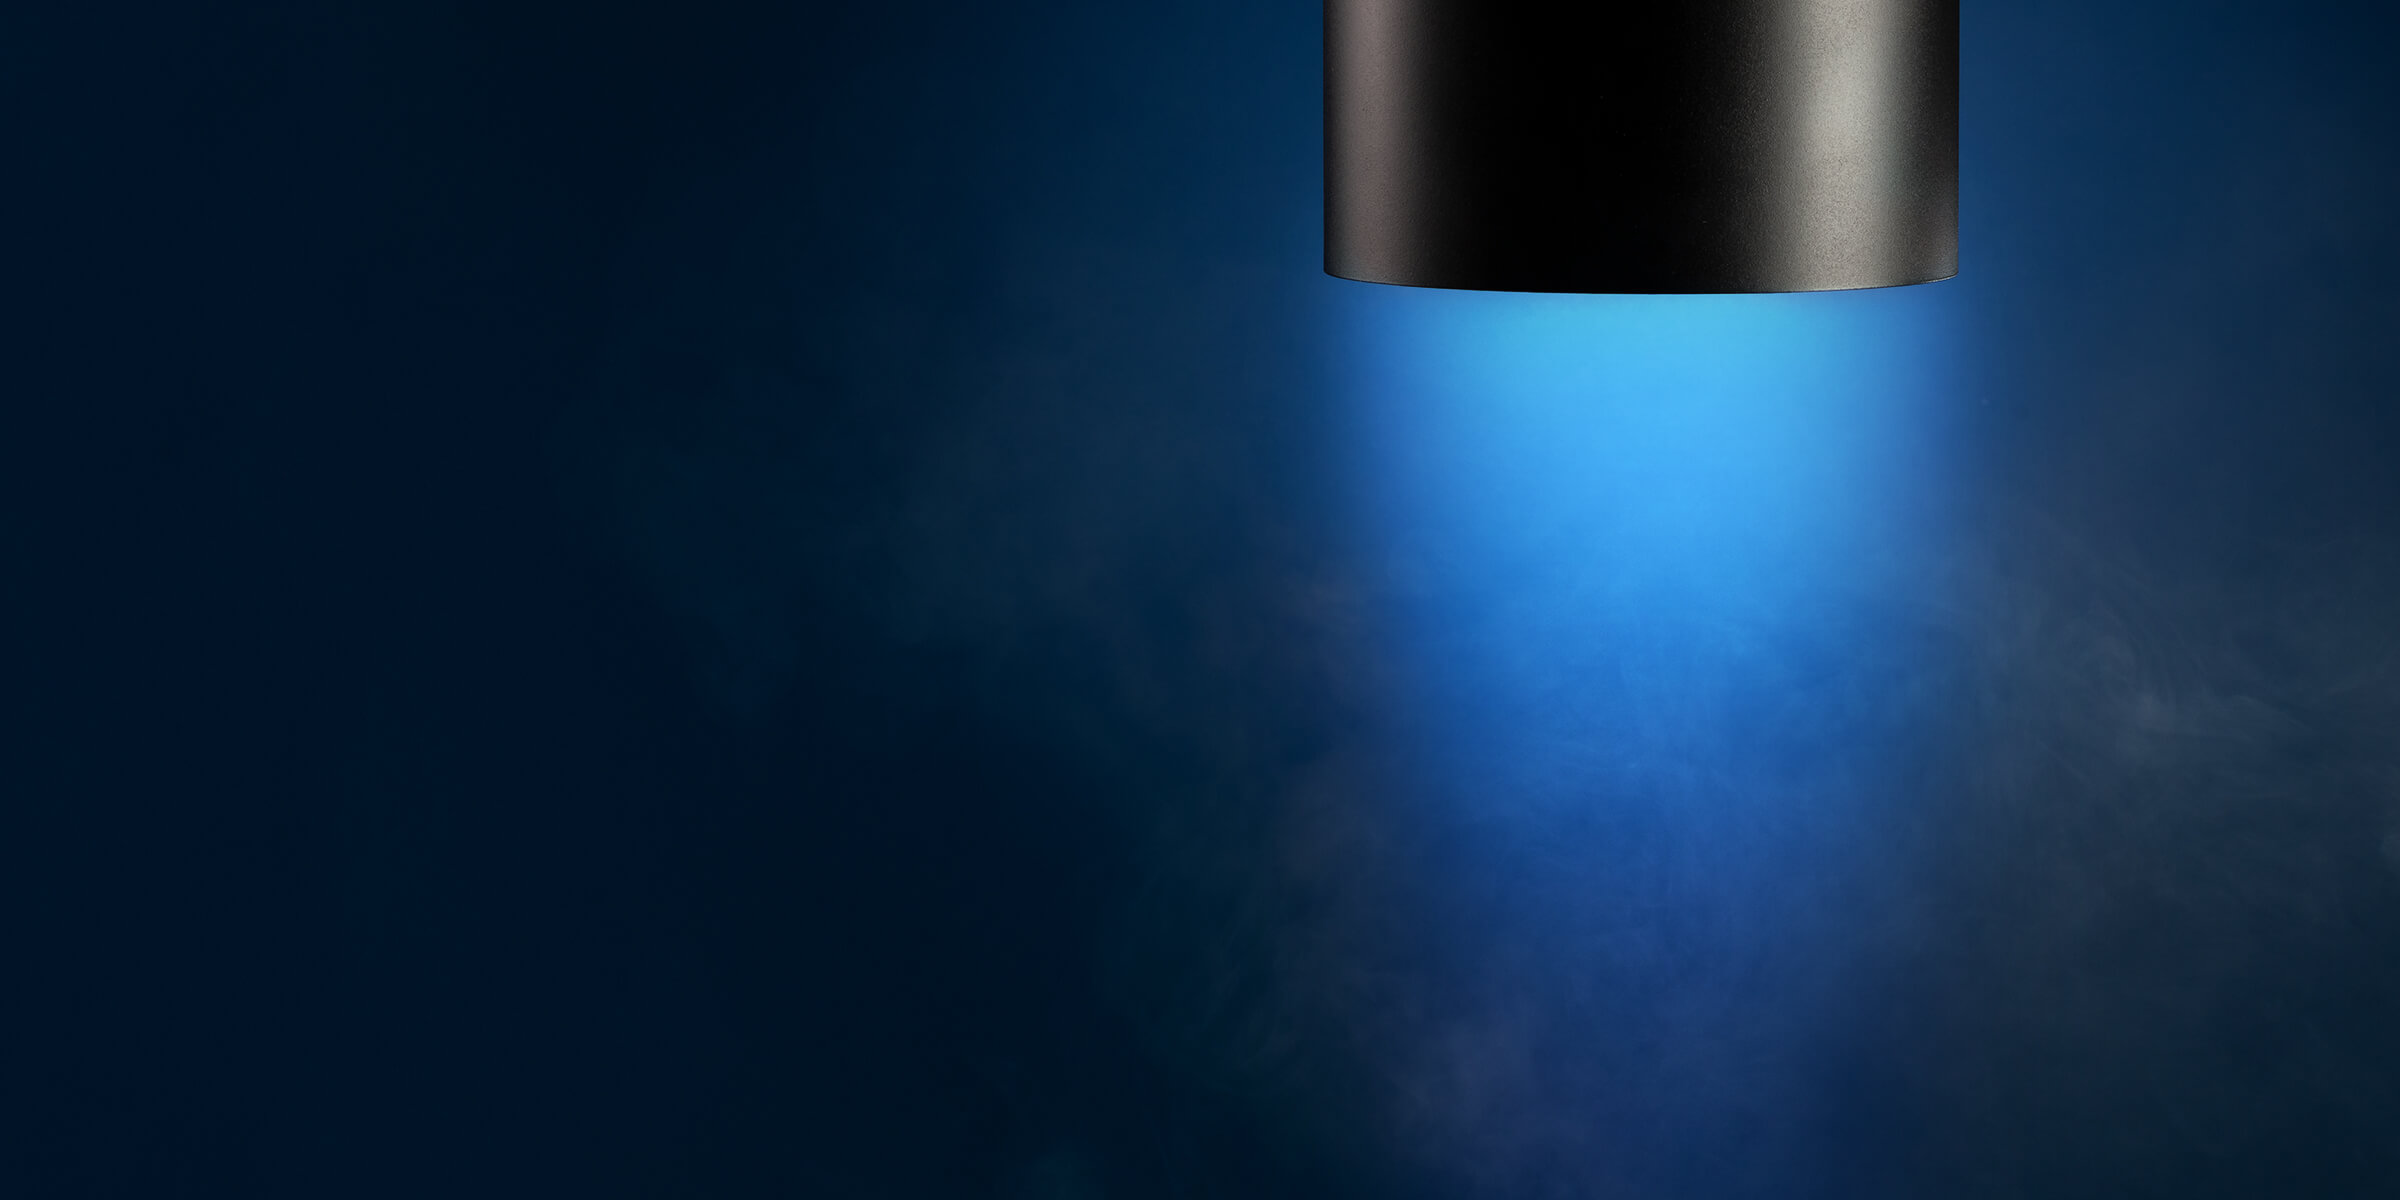 dramatic Axceleron downlight with smokey blue background